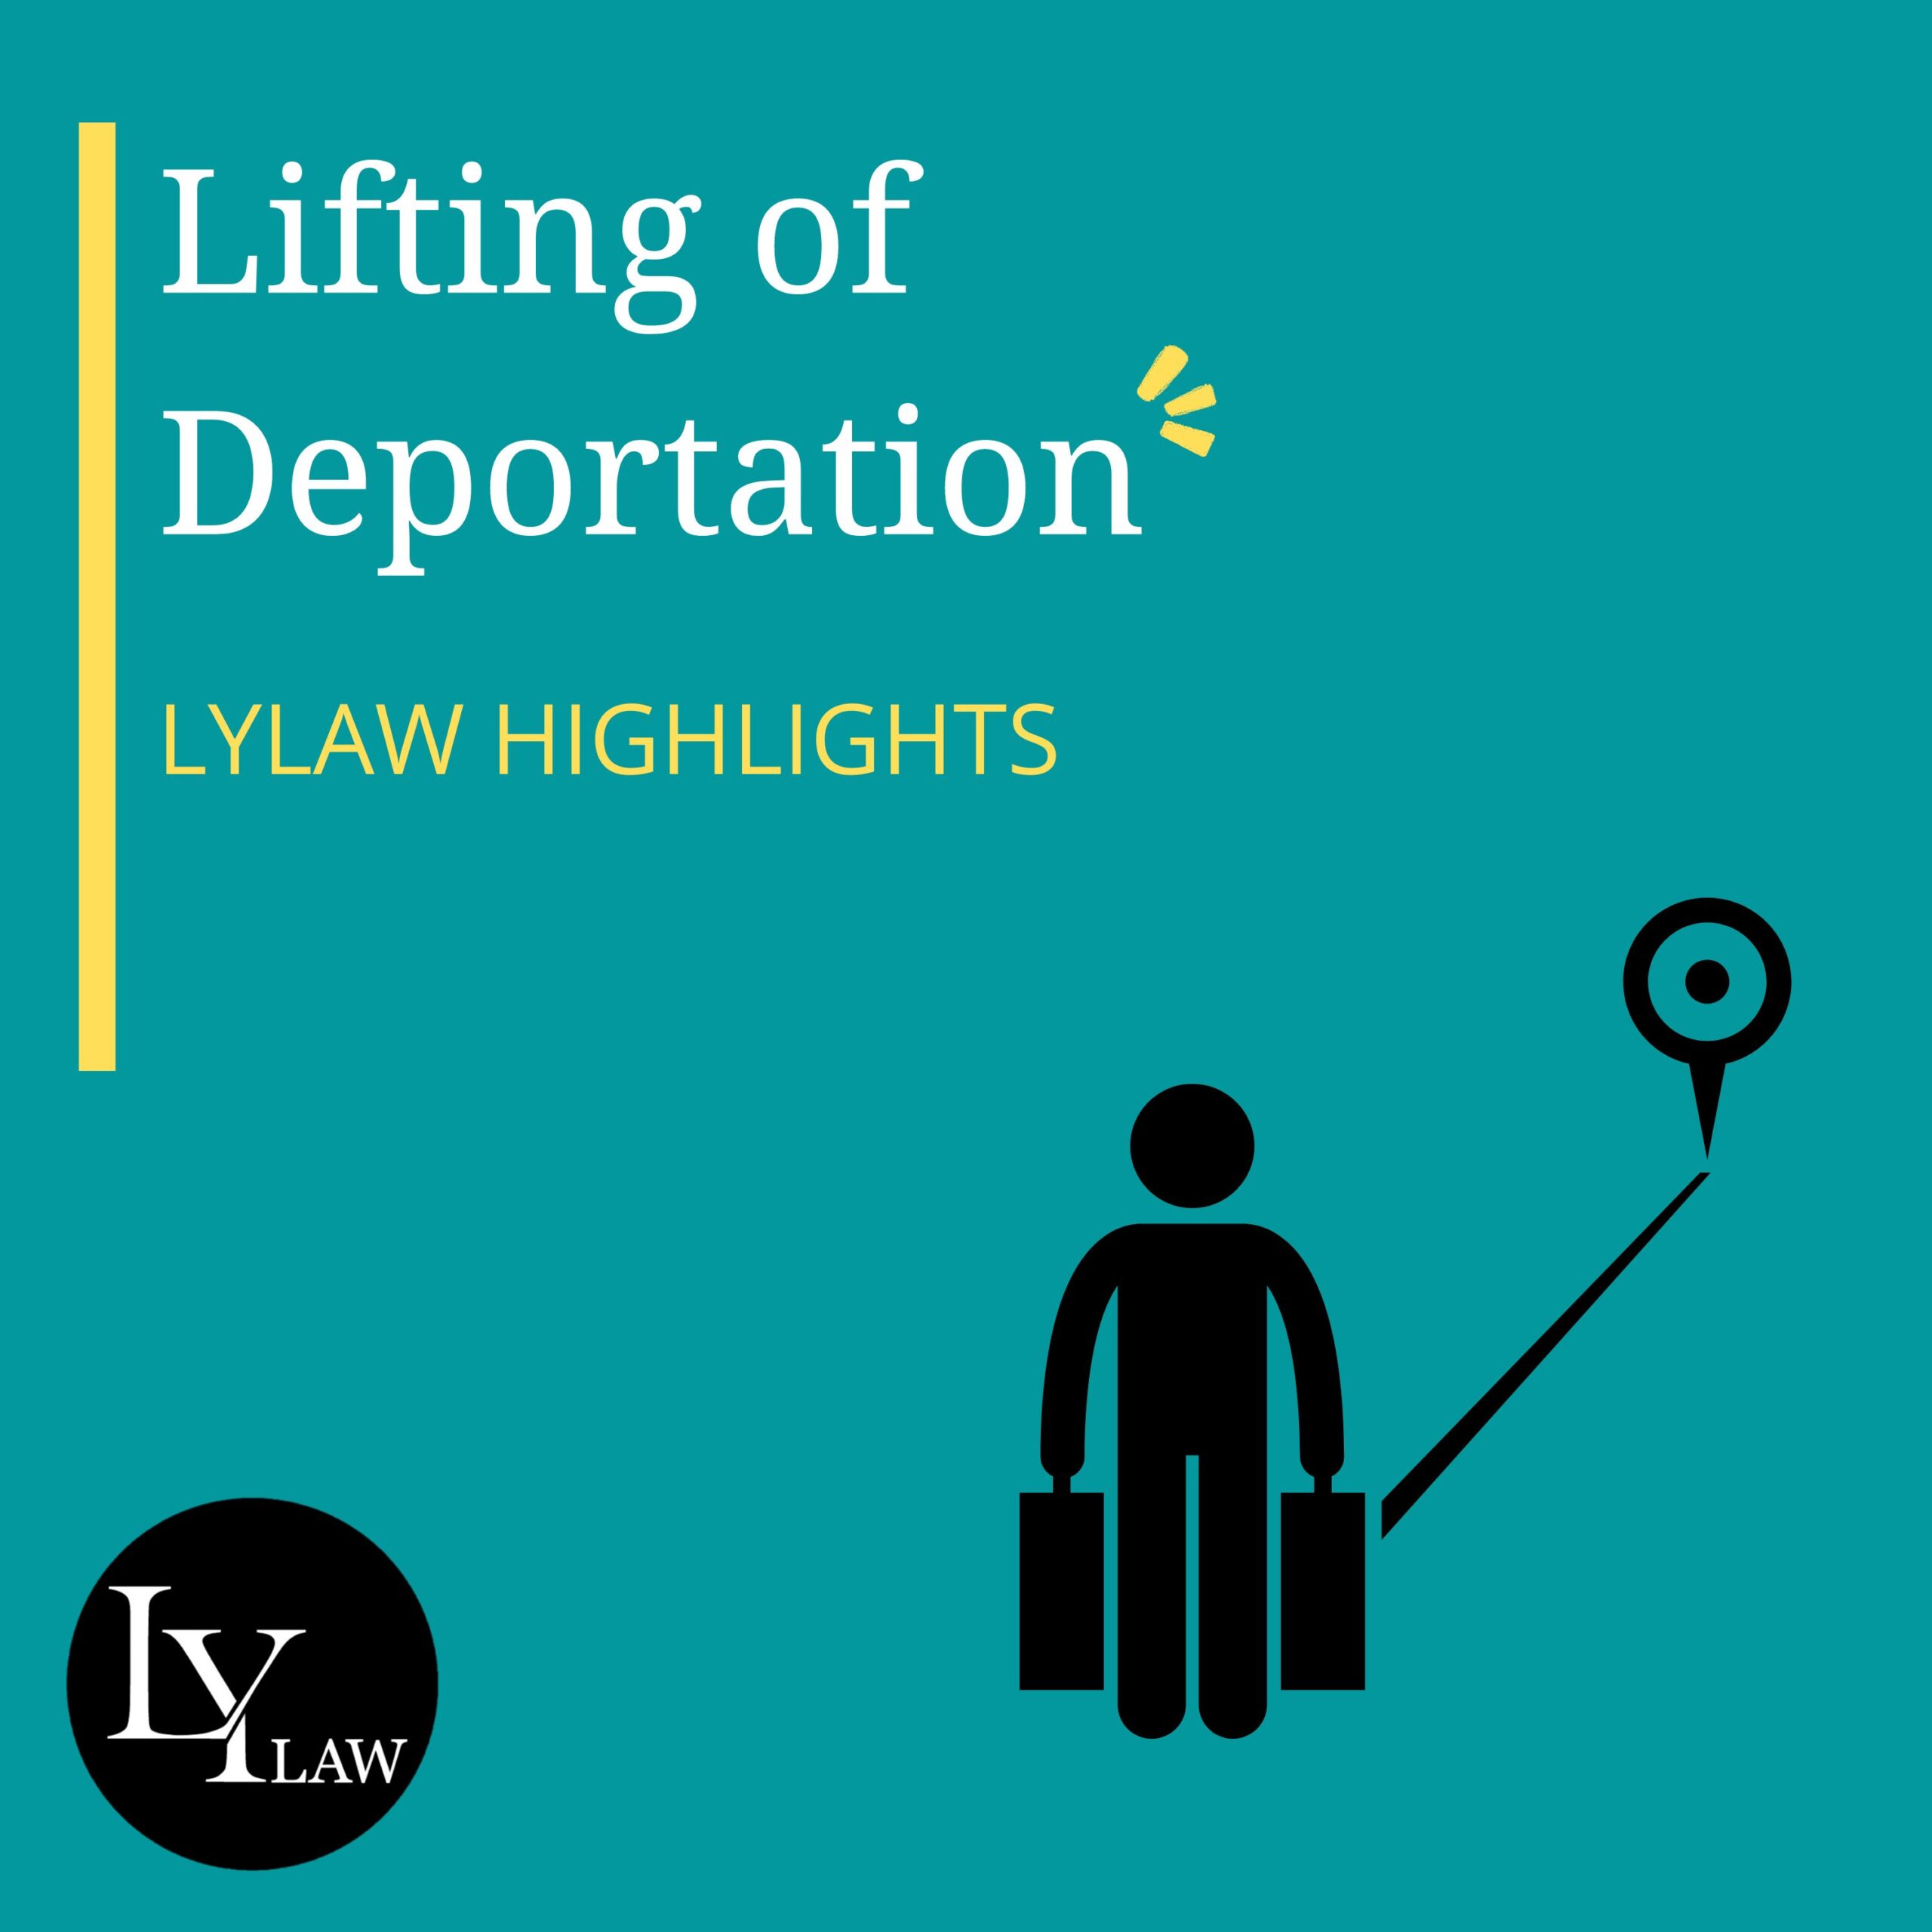 Lifting of deportation